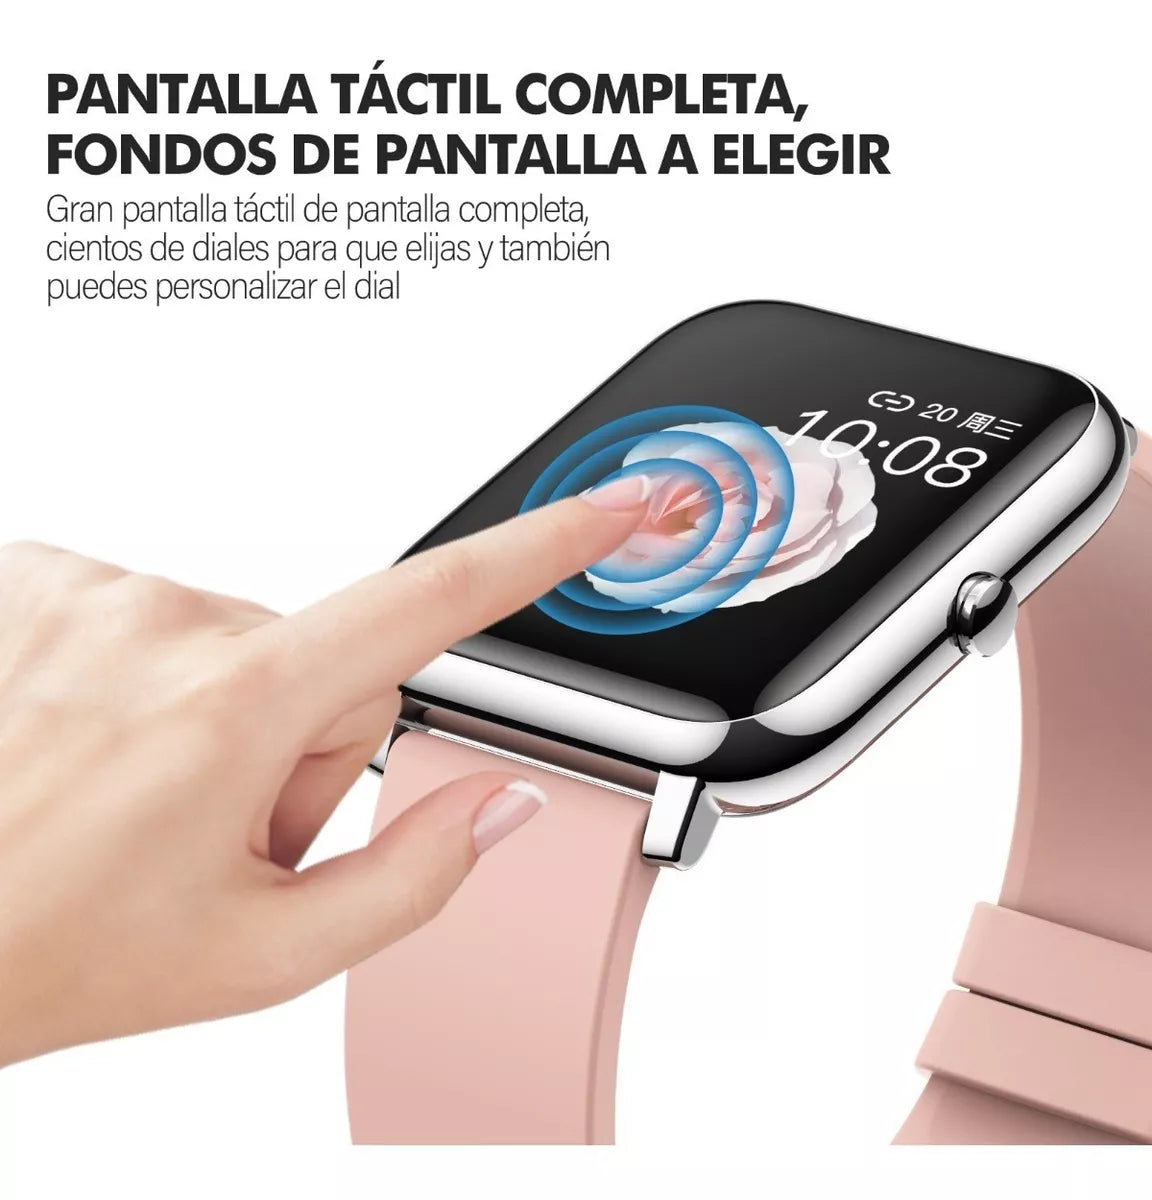 2 Smartwatcher P22 Reloj Inteligente Deportivo Impermeable Con Bluetooth